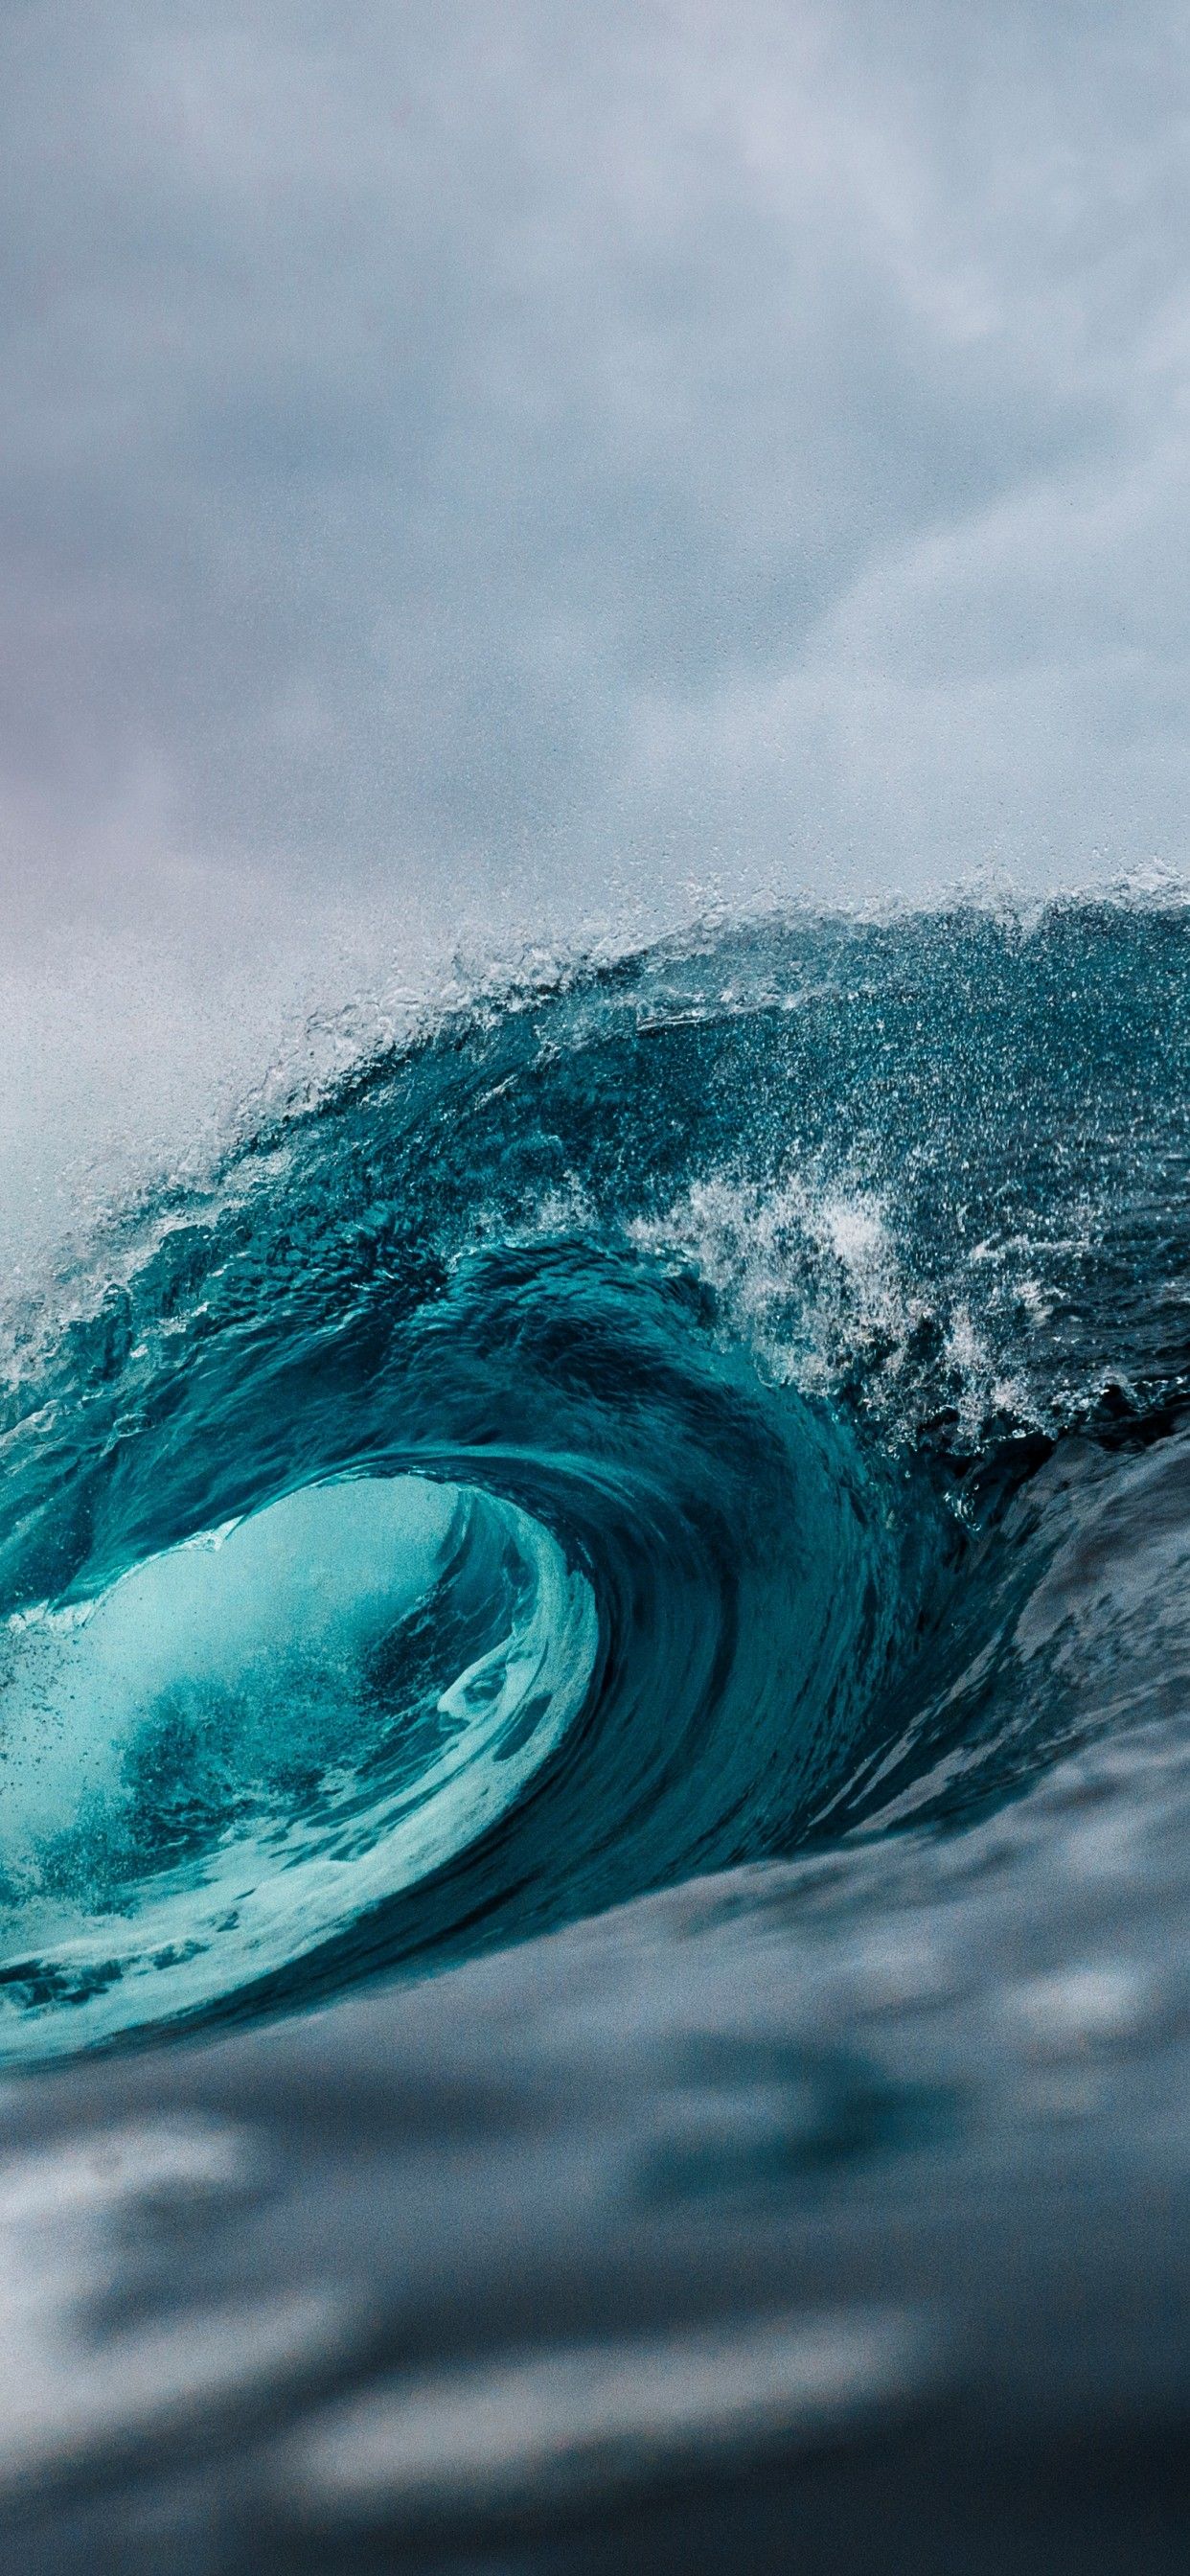 Ocean 4K Wallpaper, Waves, Water, High tides, 5K, Nature